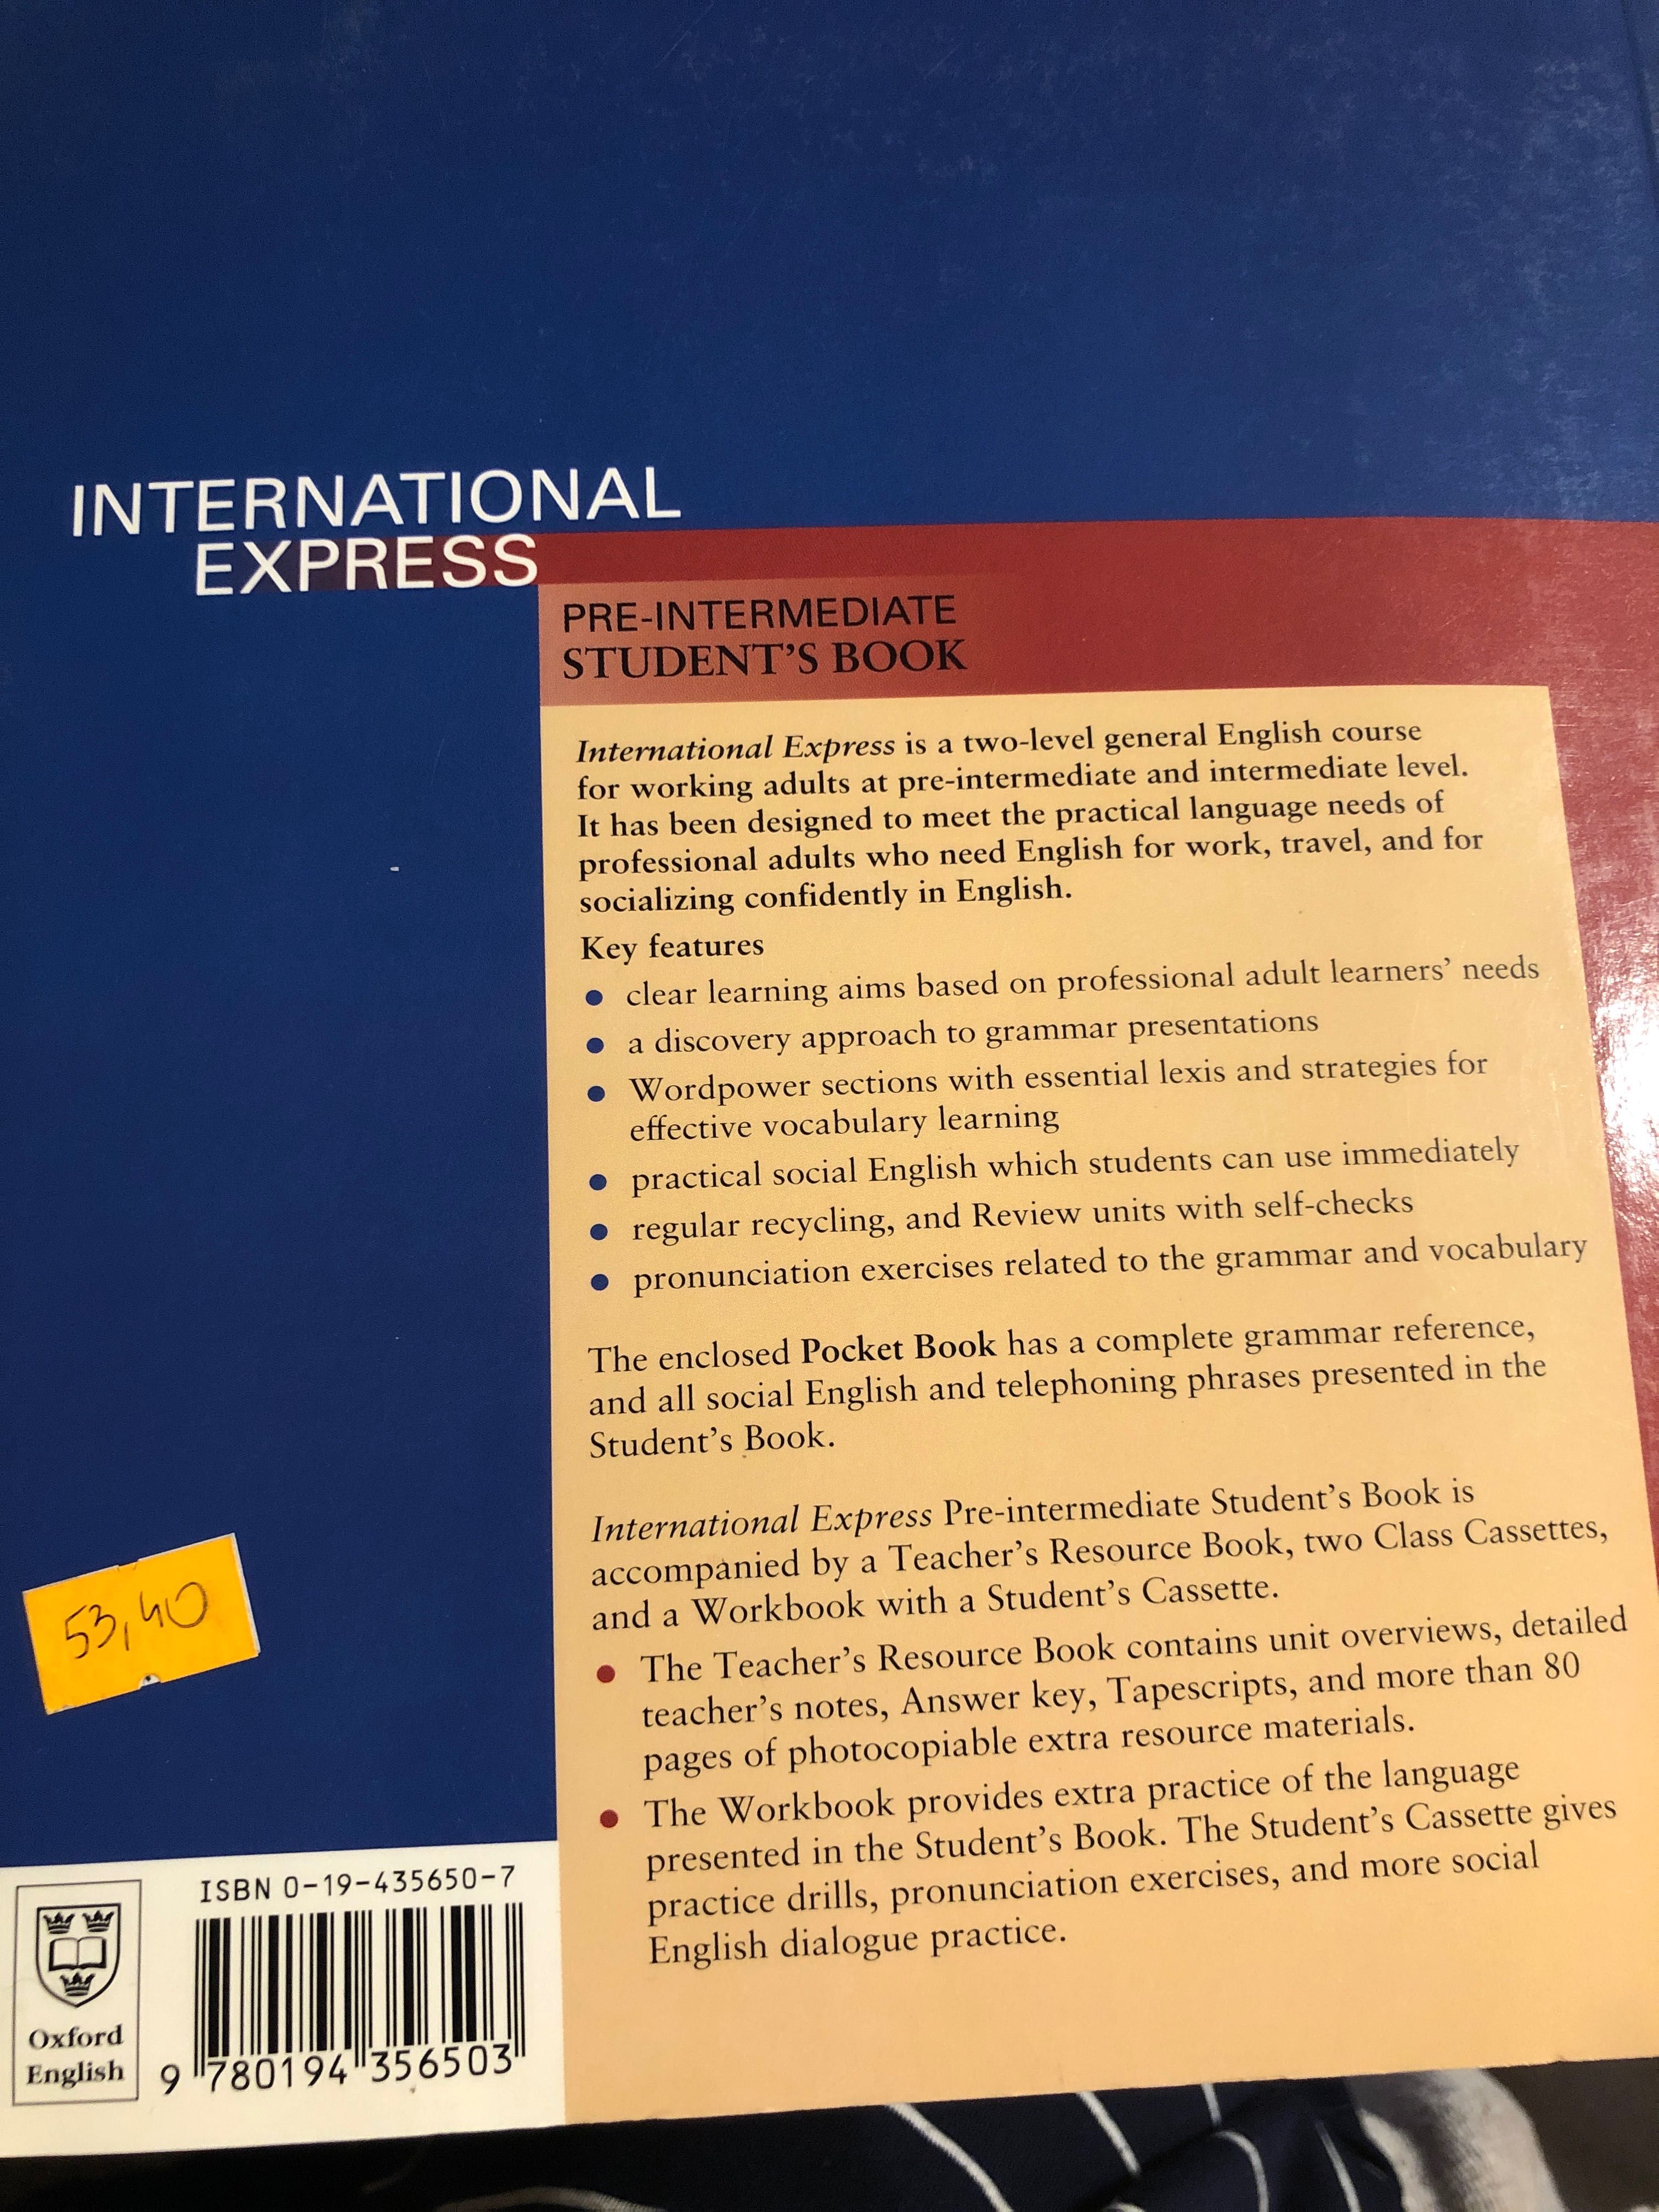 International Express pre-intermediate SB with pocket Book